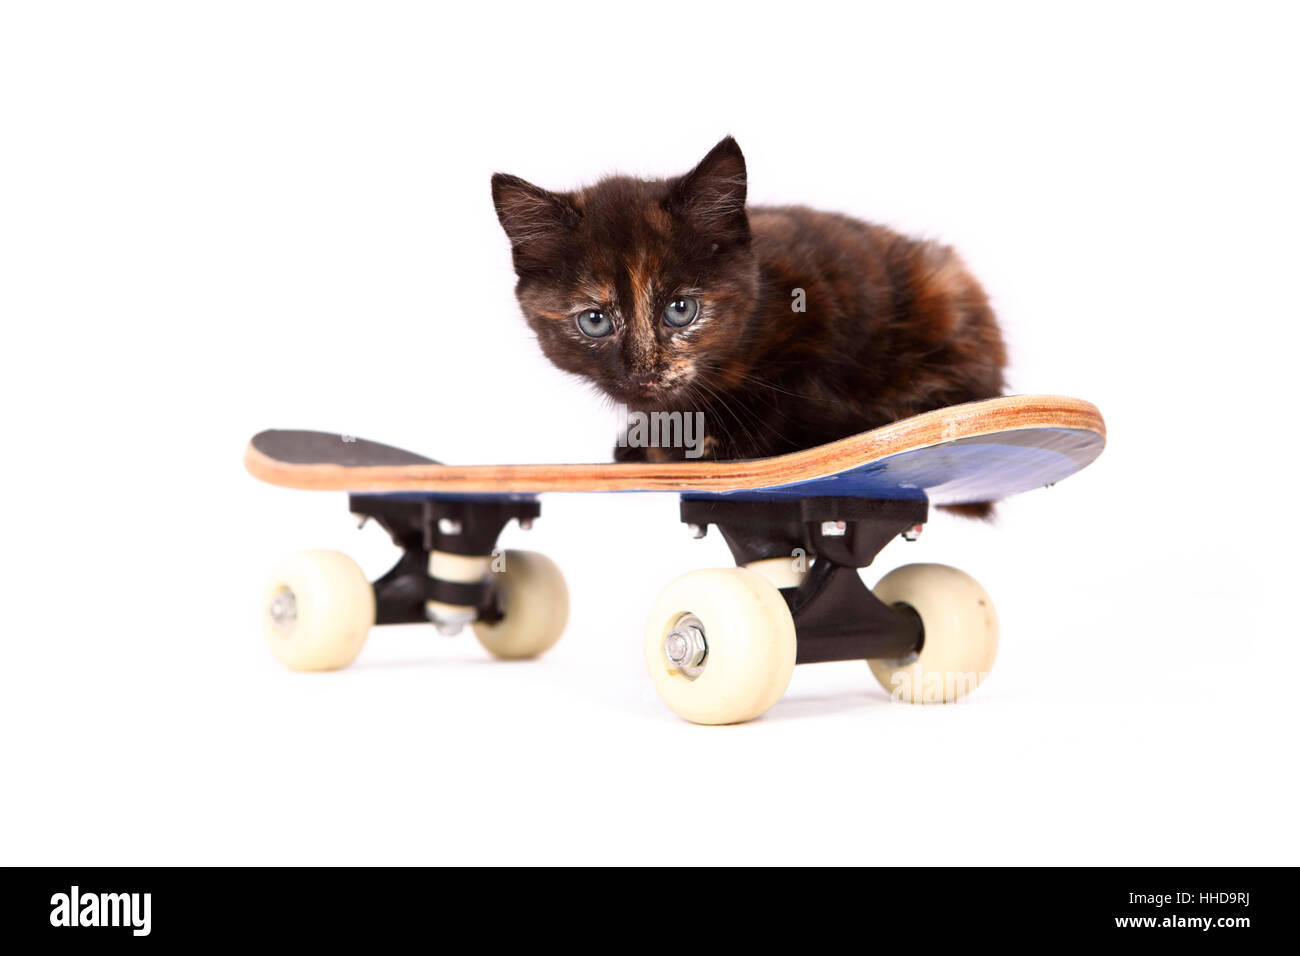 Europaeisch Kurzhaar. Kitten (6 weeks old) lying on a skateboard. Studio picture against a white background Stock Photo